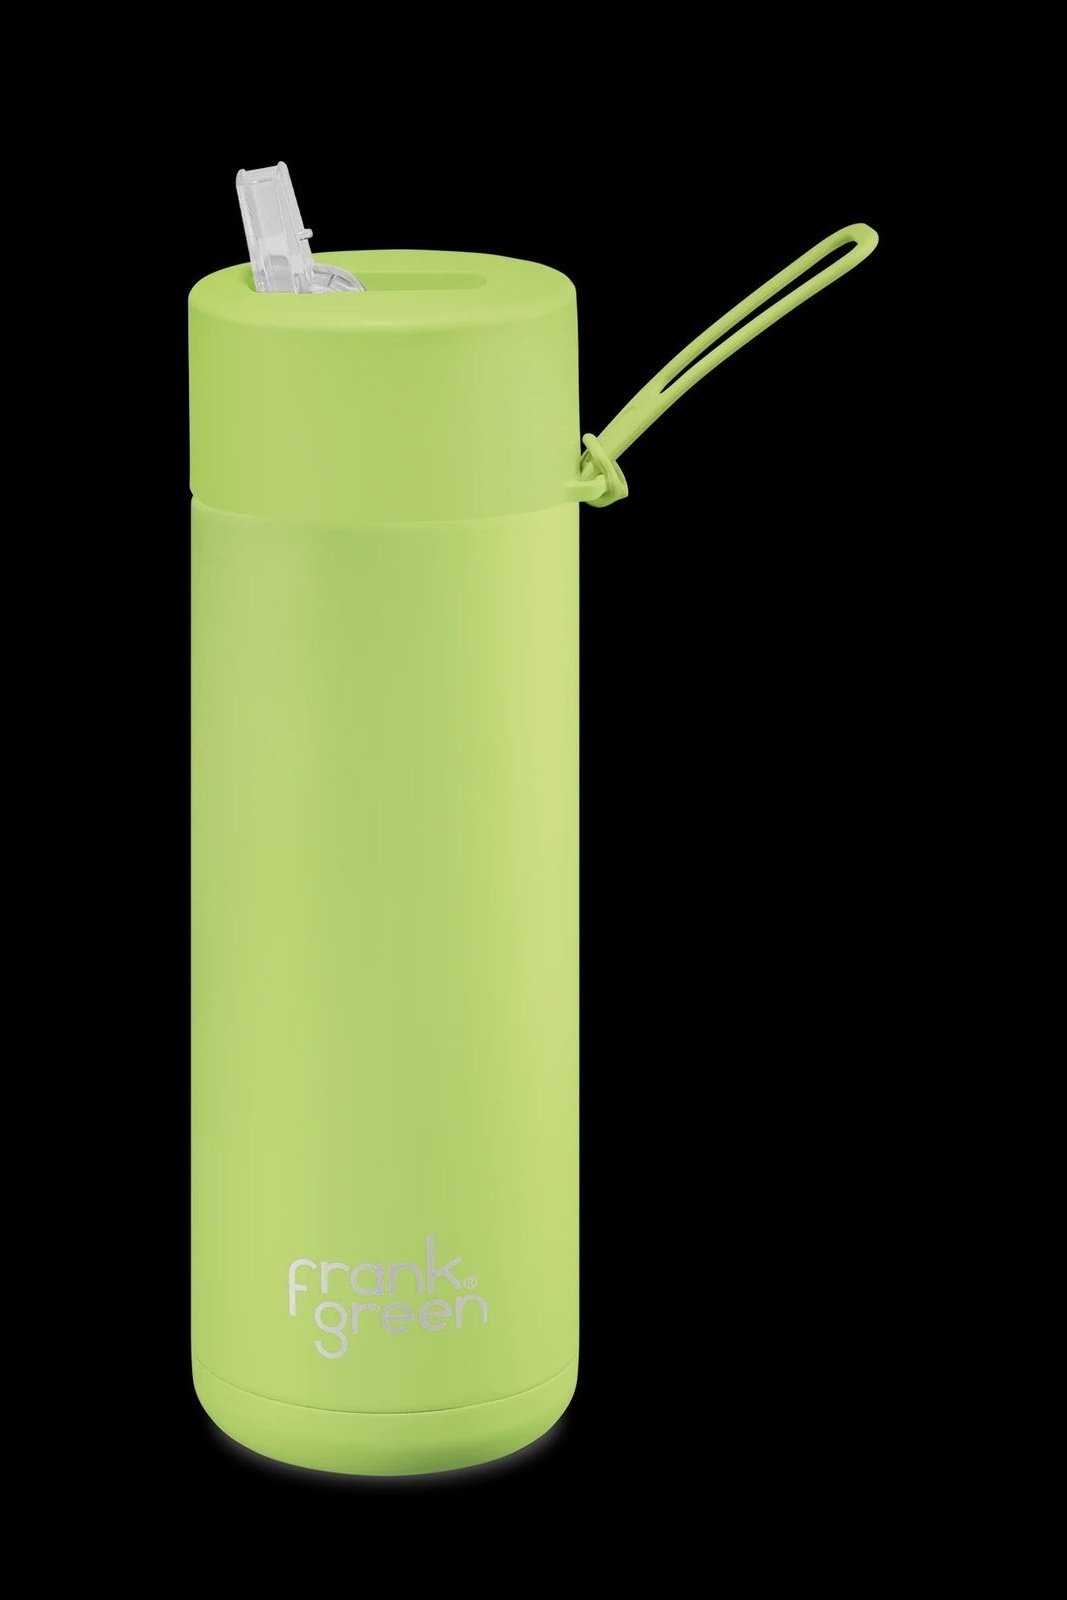 Frank green limited edition ceramic reusable bottle - 34oz / 1,000ml - pistachio green